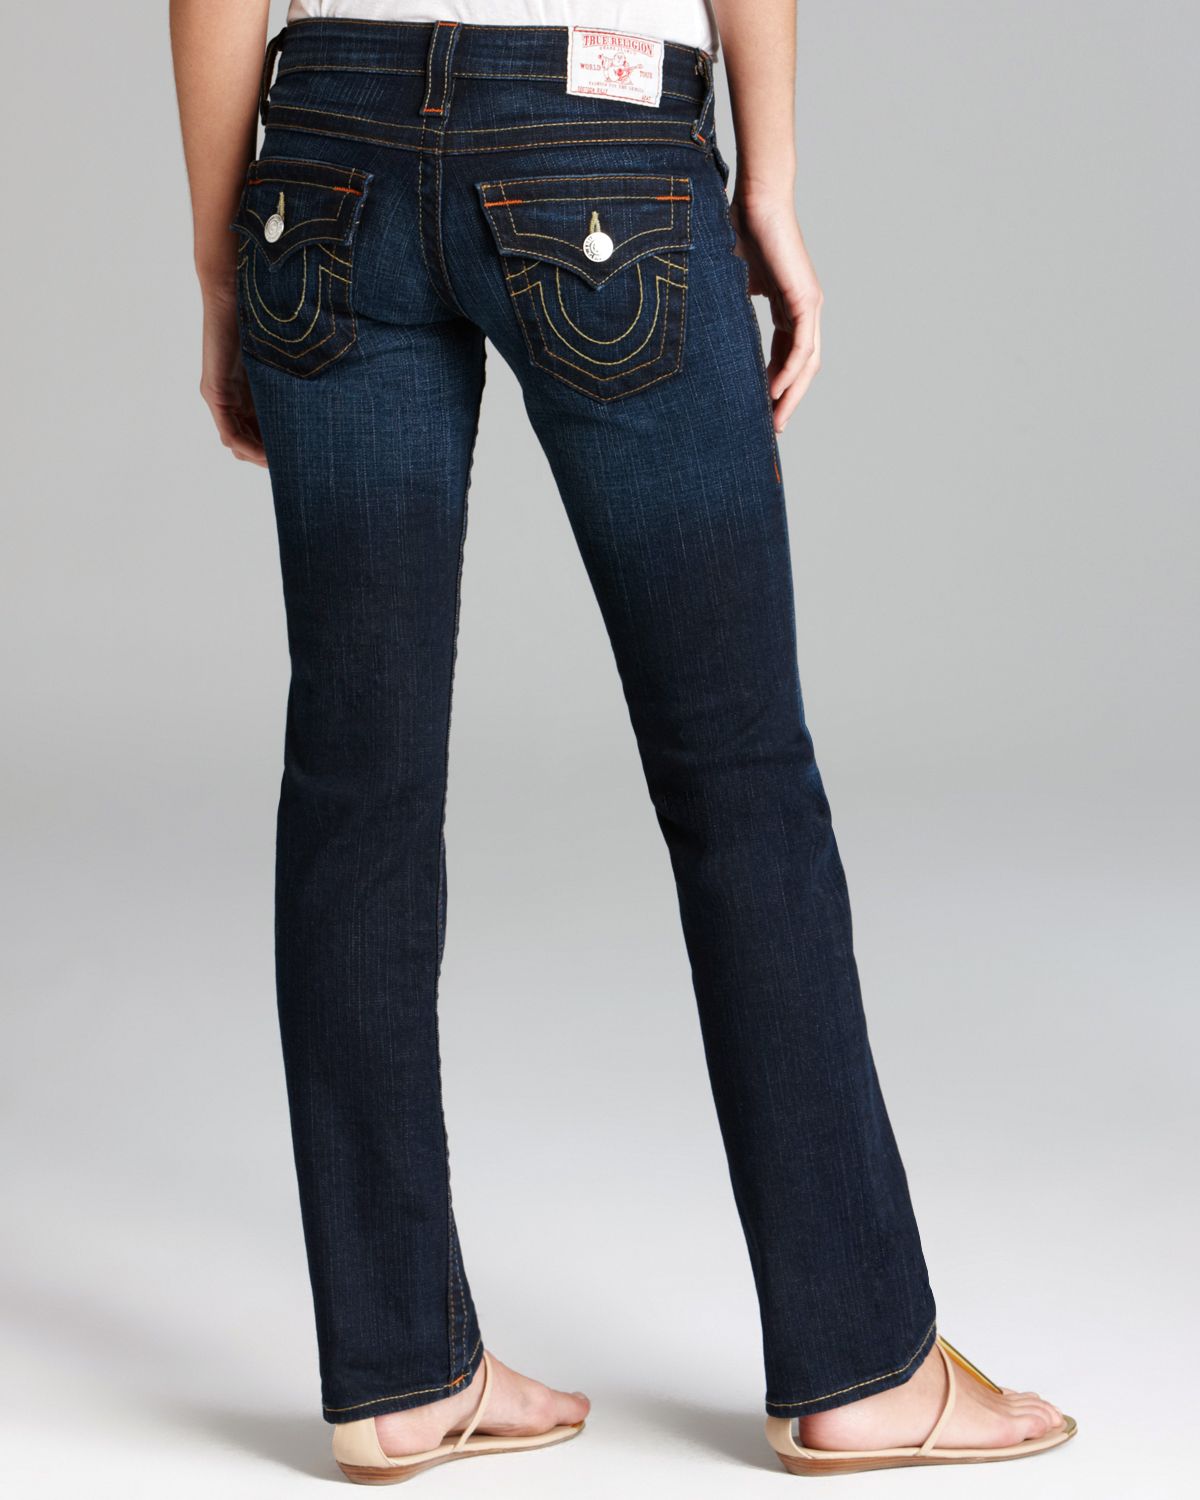 true religion women's jeans sale Off 52% - canerofset.com